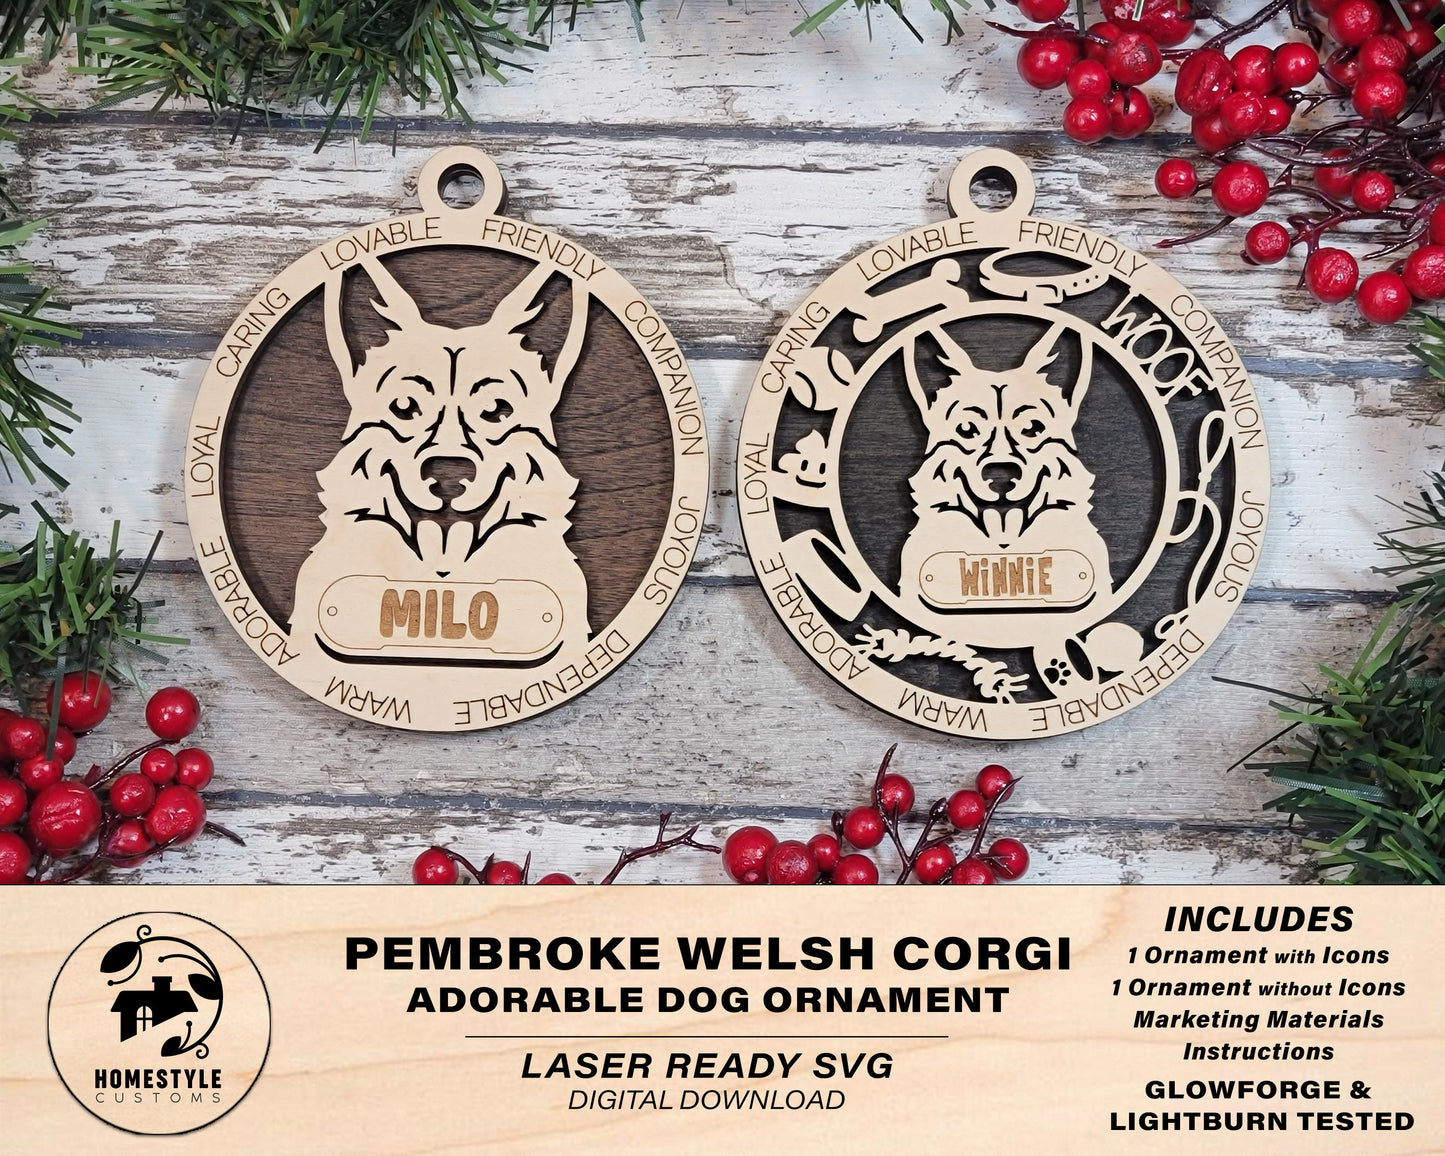 Pembroke Welsh Corgi - Adorable Dog Ornaments - 2 Ornaments included - SVG, PDF, AI File Download - Sized for Glowforge